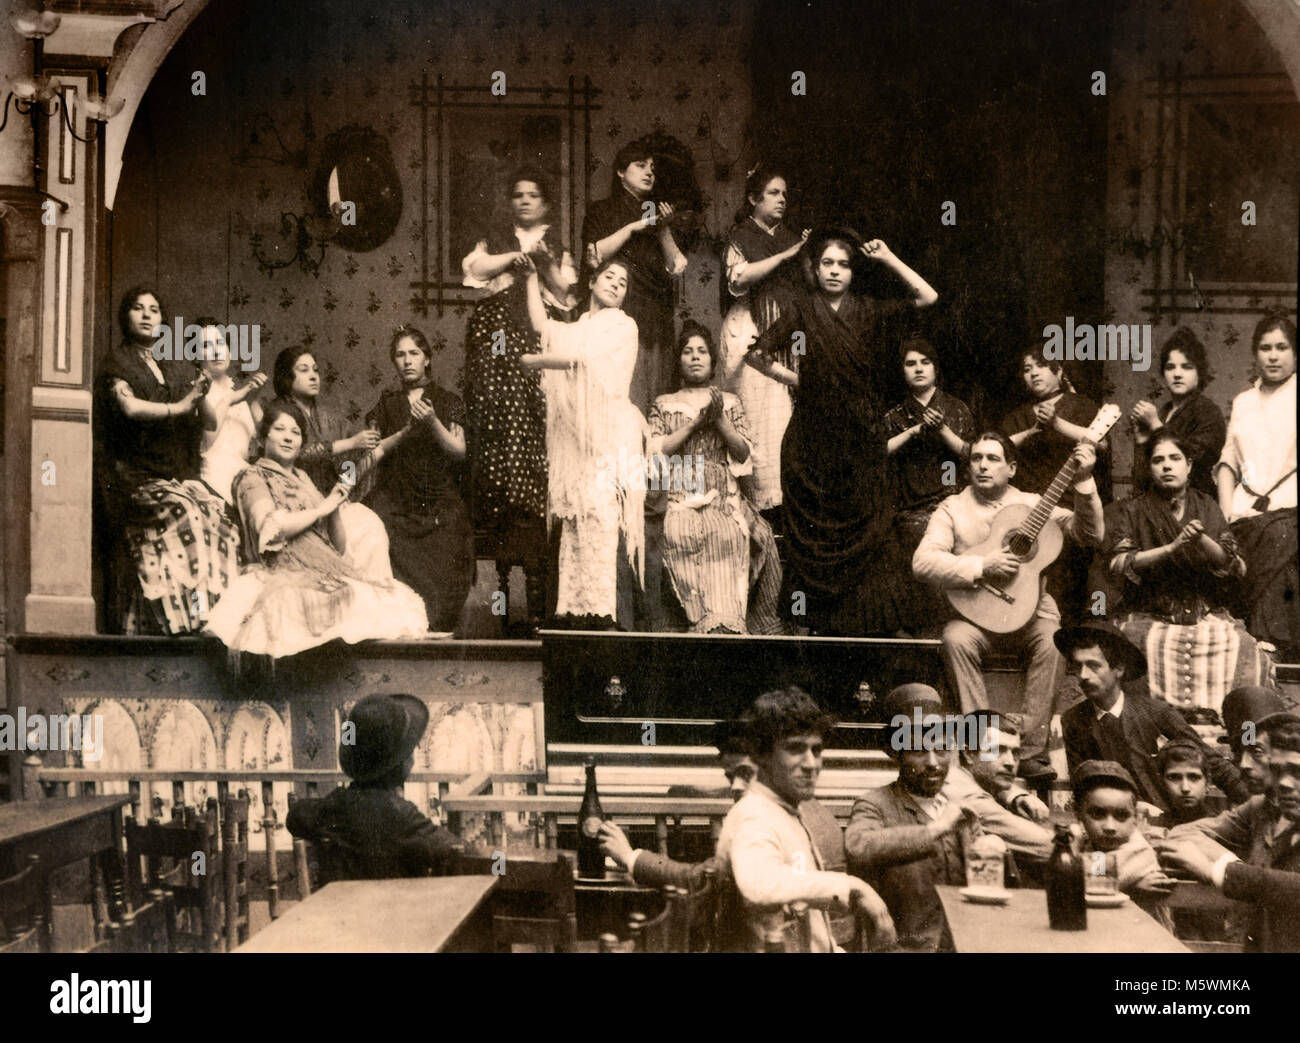 Guitarra flamenca dibujo fotografías e imágenes de alta resolución - Alamy